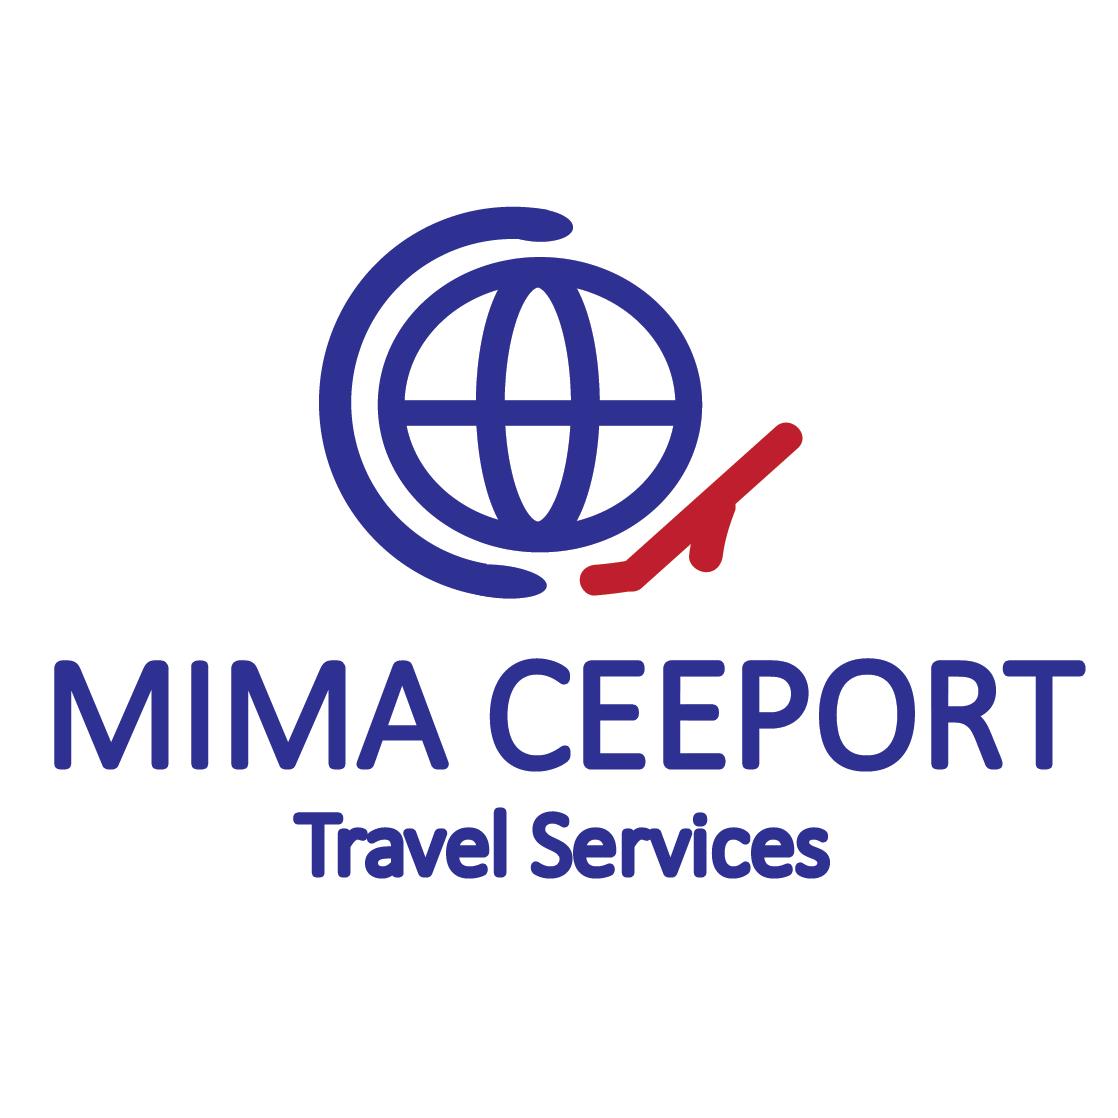 MIMA CEEPORT TRAVEL SERVICES LOGO